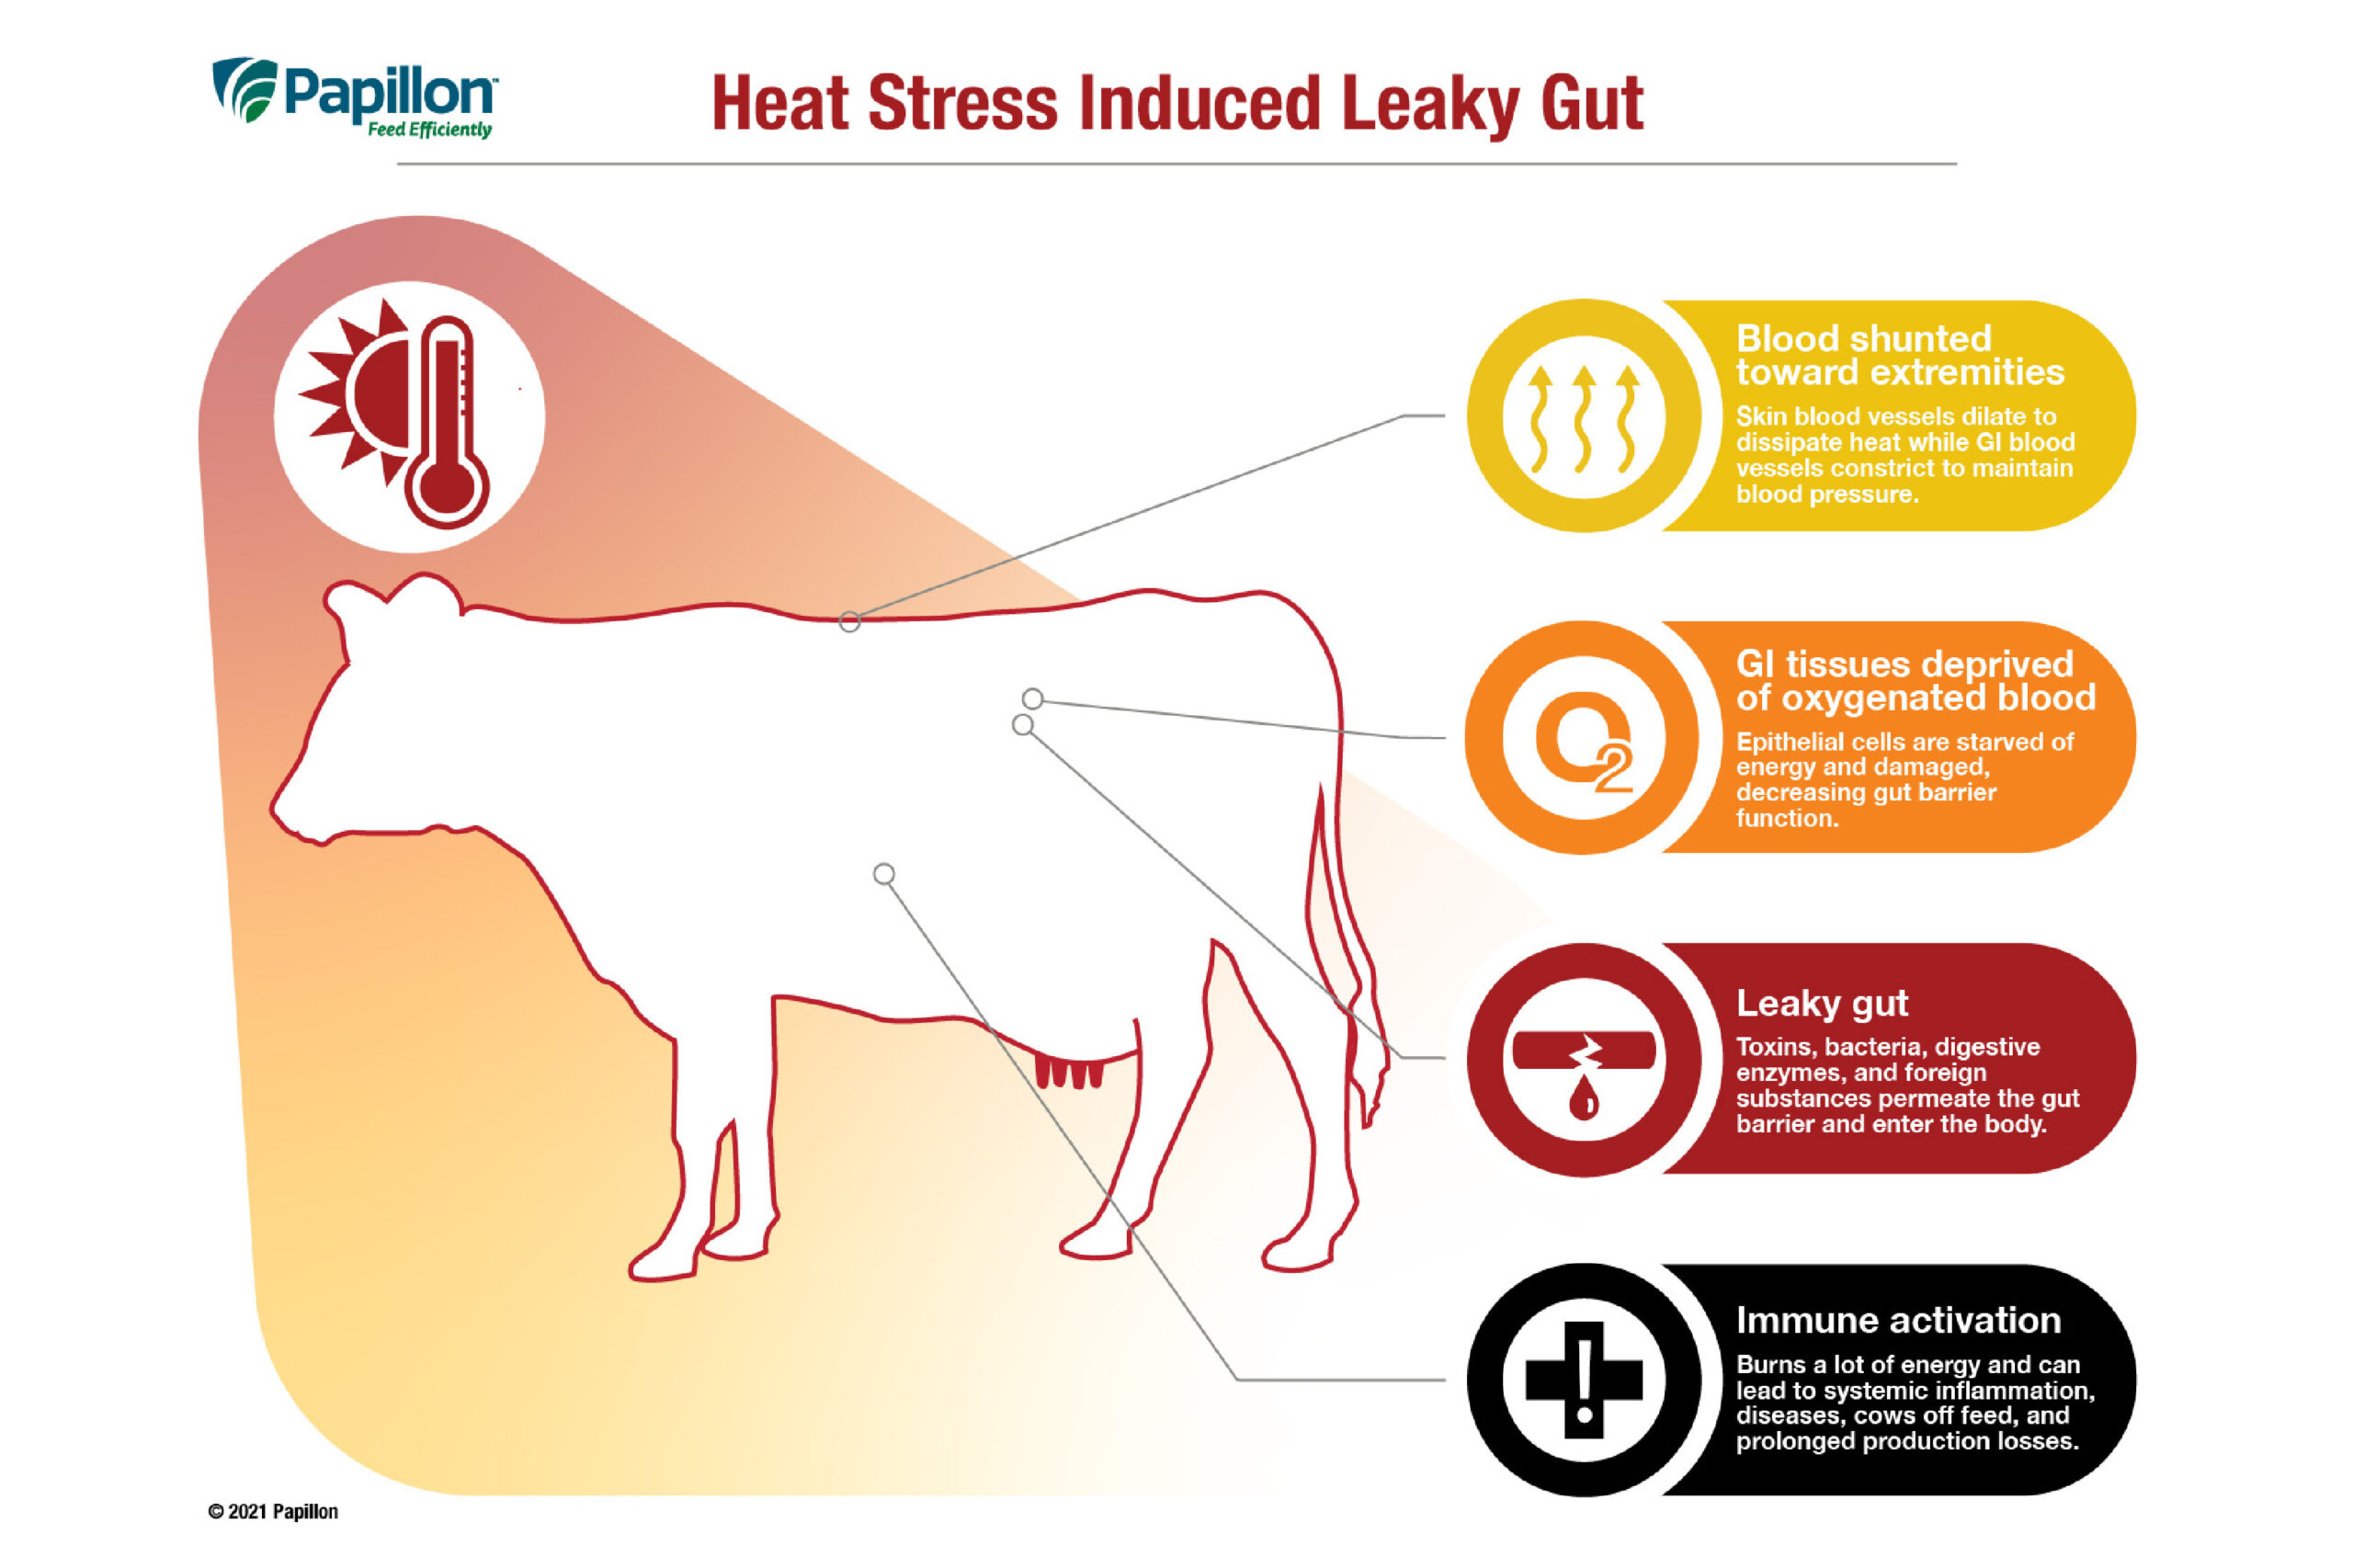 Papillon- Heat stress induced leaky gut